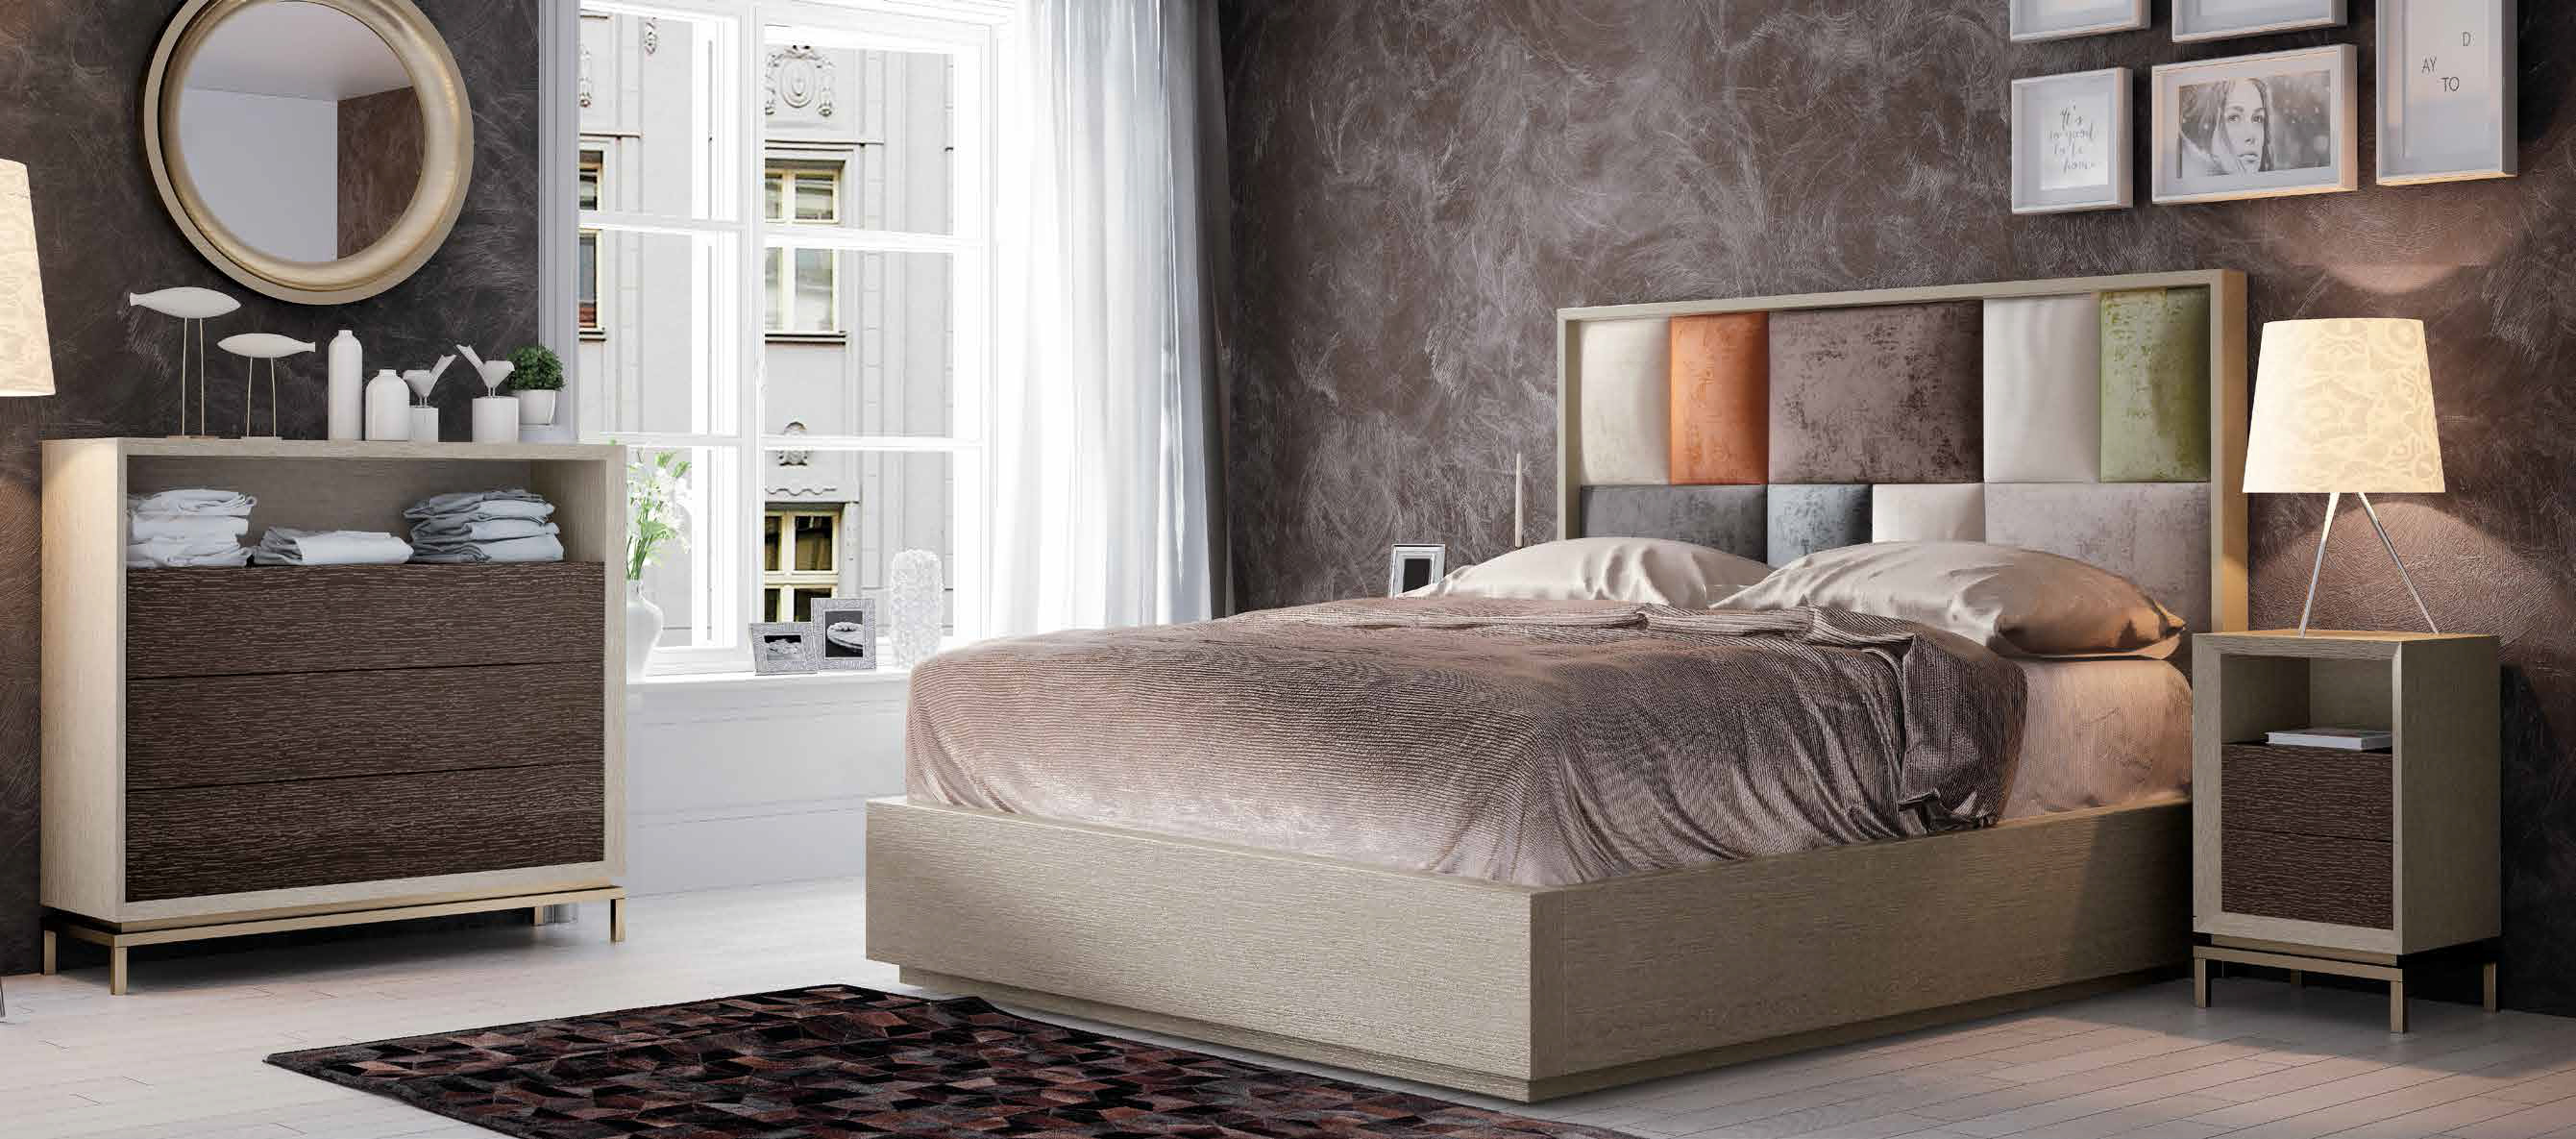 Brands Franco Furniture Bedrooms vol3, Spain DOR 46